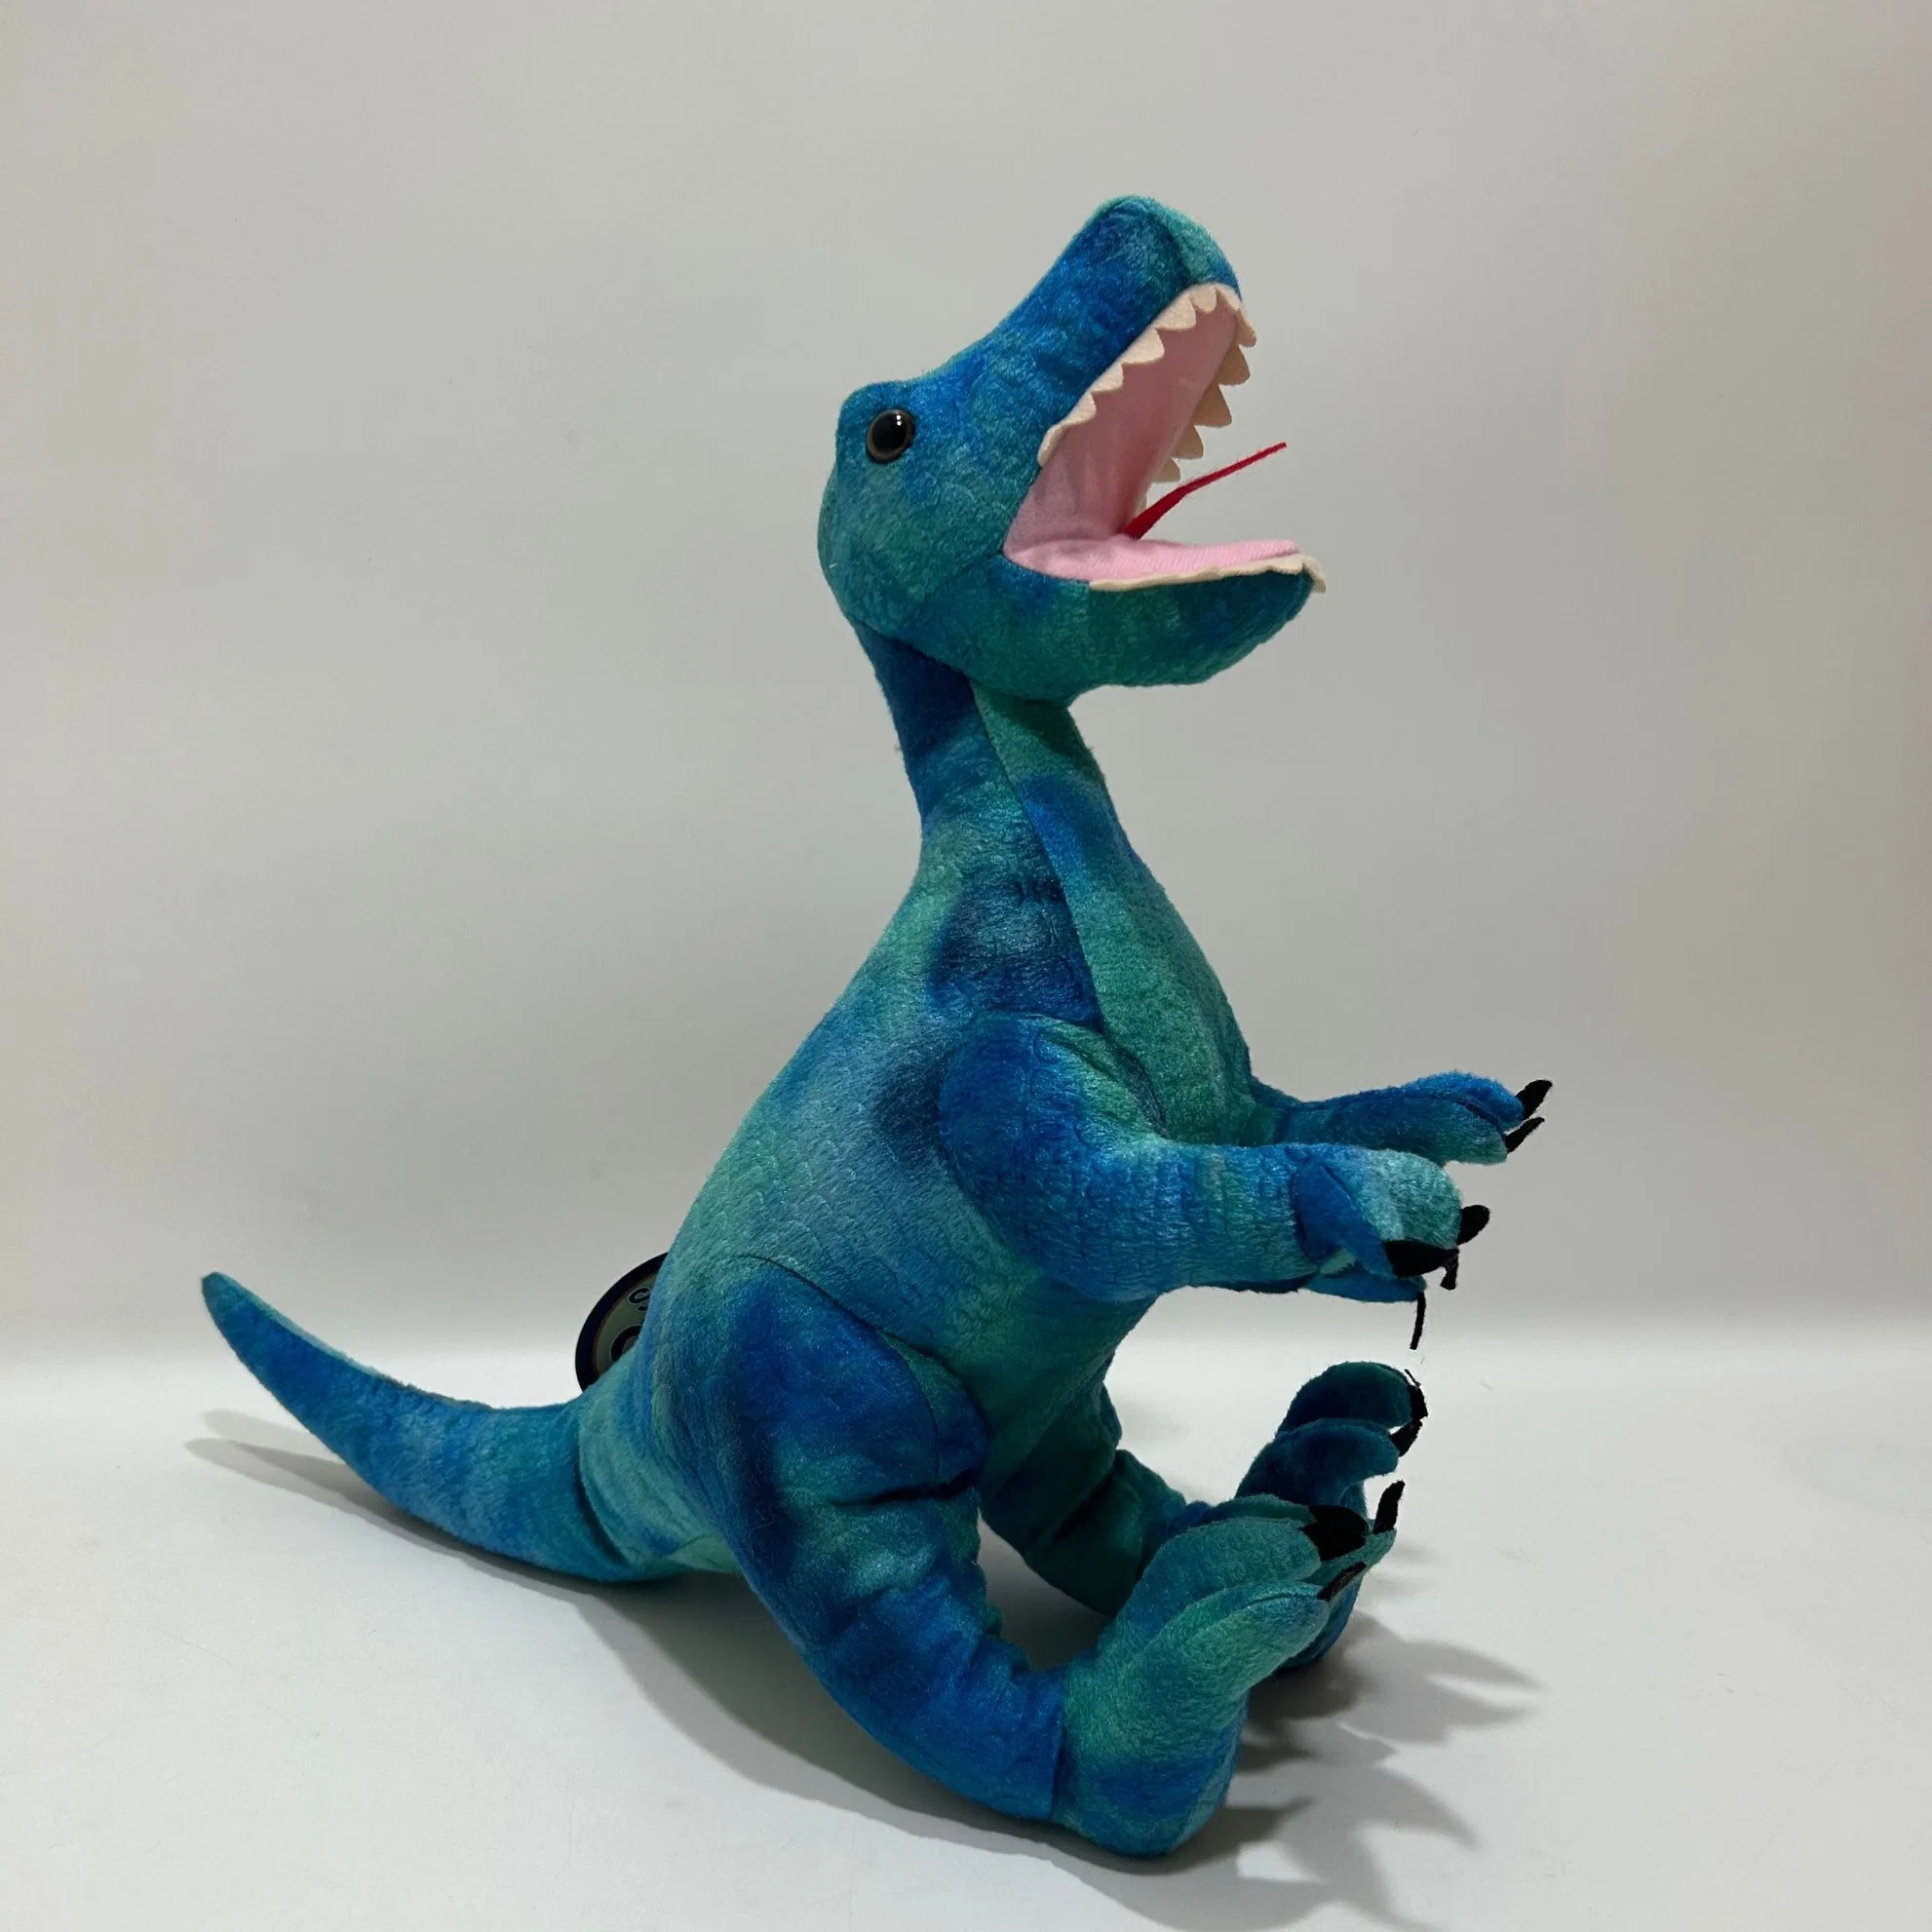 52cm Fashion Tie Dye Dinosaur Plush Soft Cute Dinosaur Stuffed Animal Toys and Best Gift for Kids